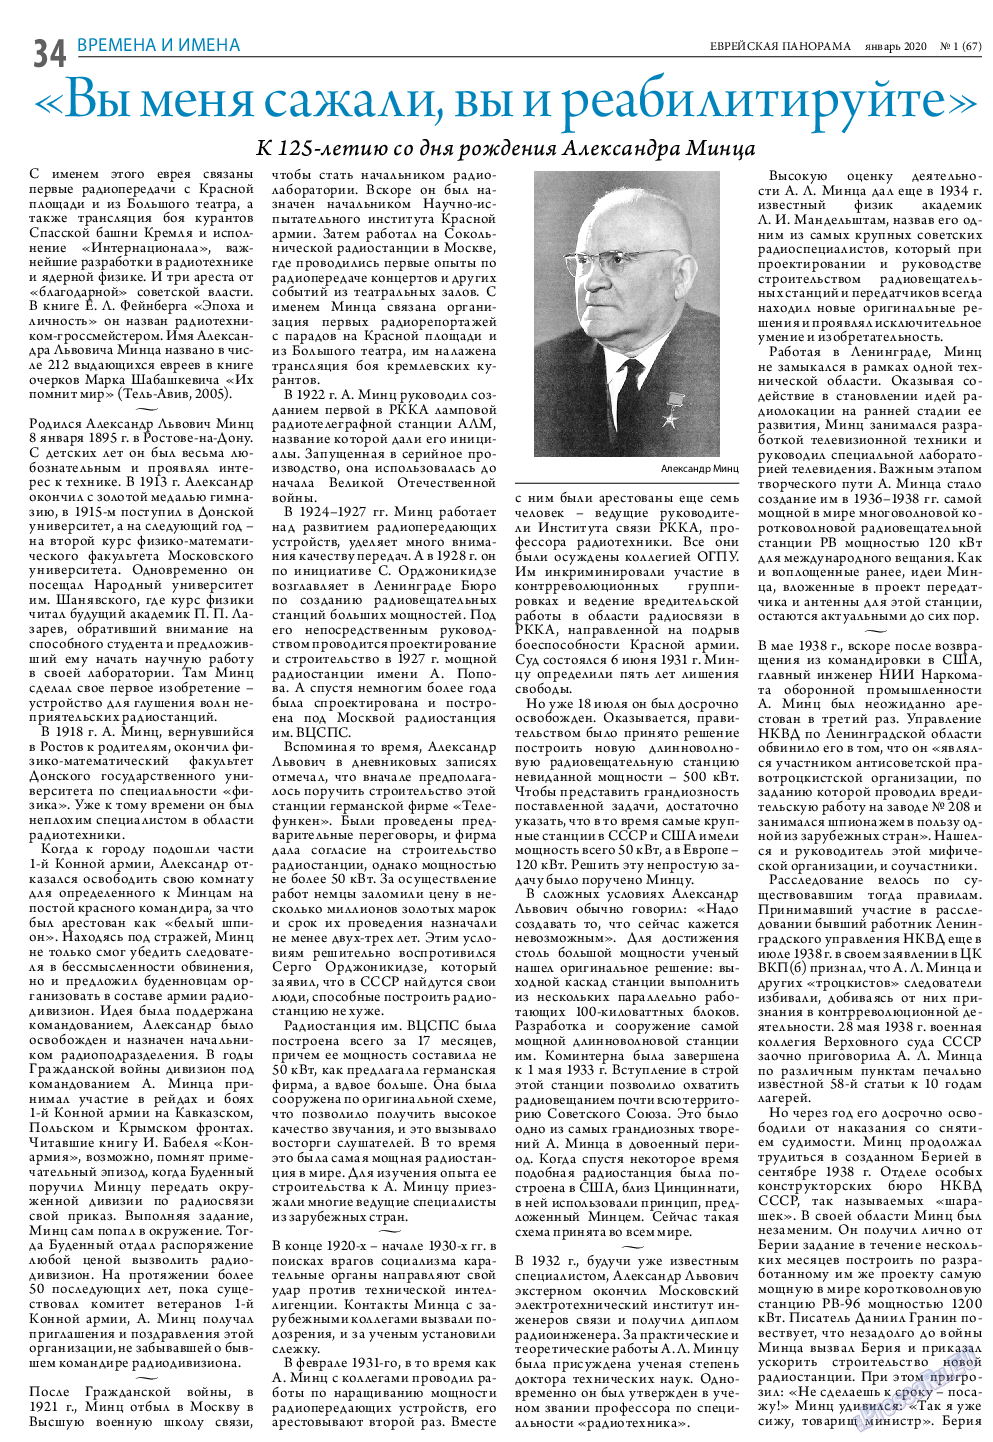 Еврейская панорама, газета. 2020 №1 стр.34